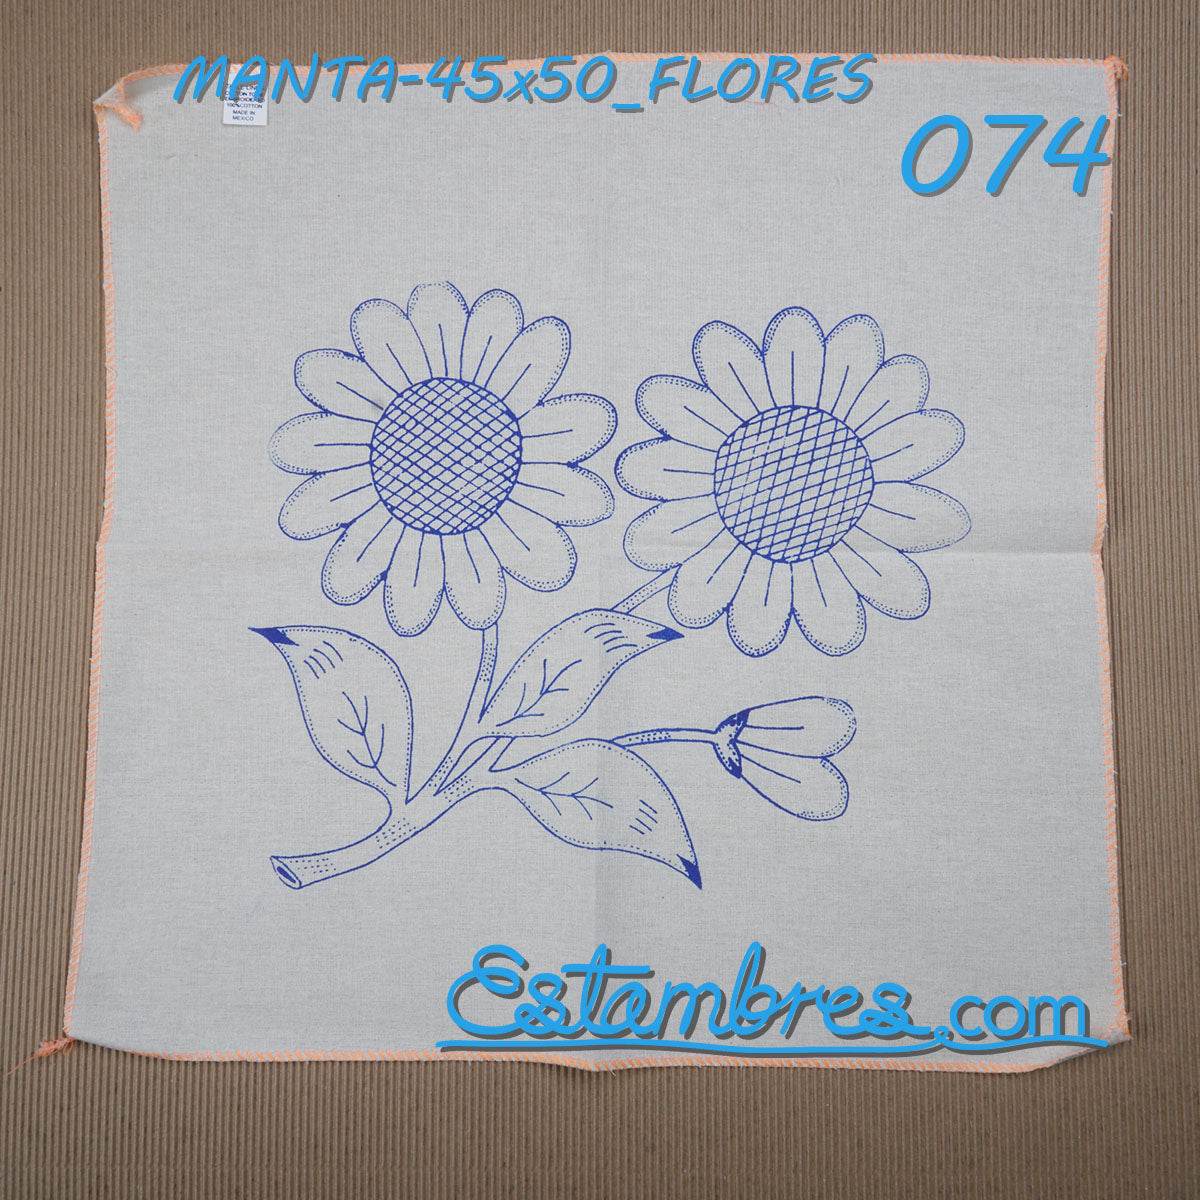 FLORES - Manta [45x50cm]